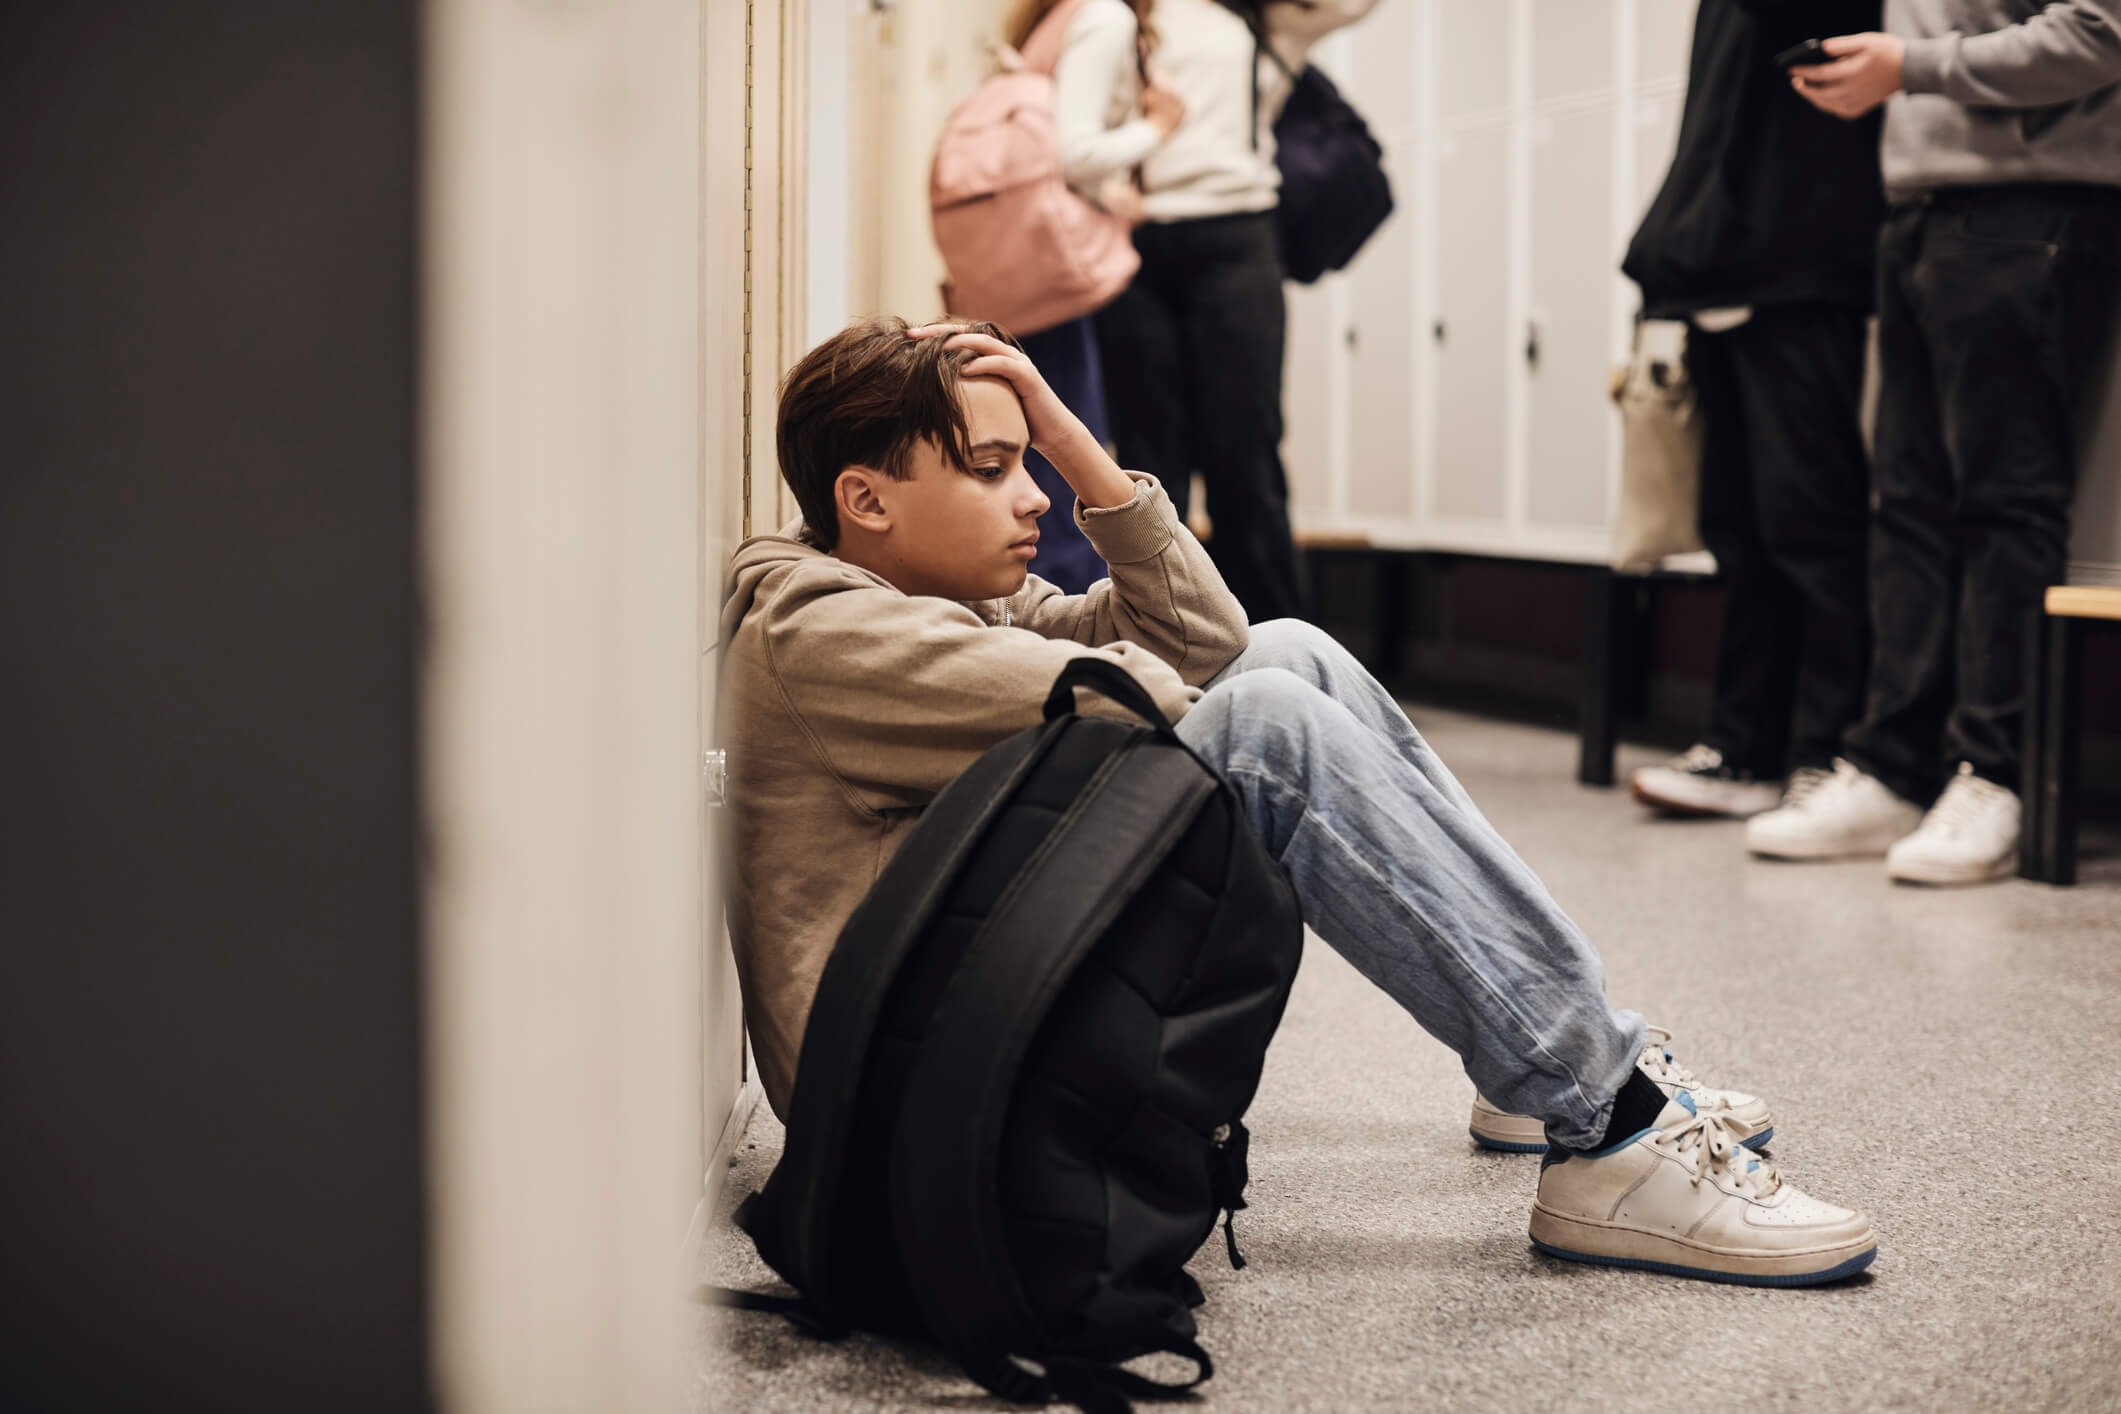 Teenager at School sitting in hallway